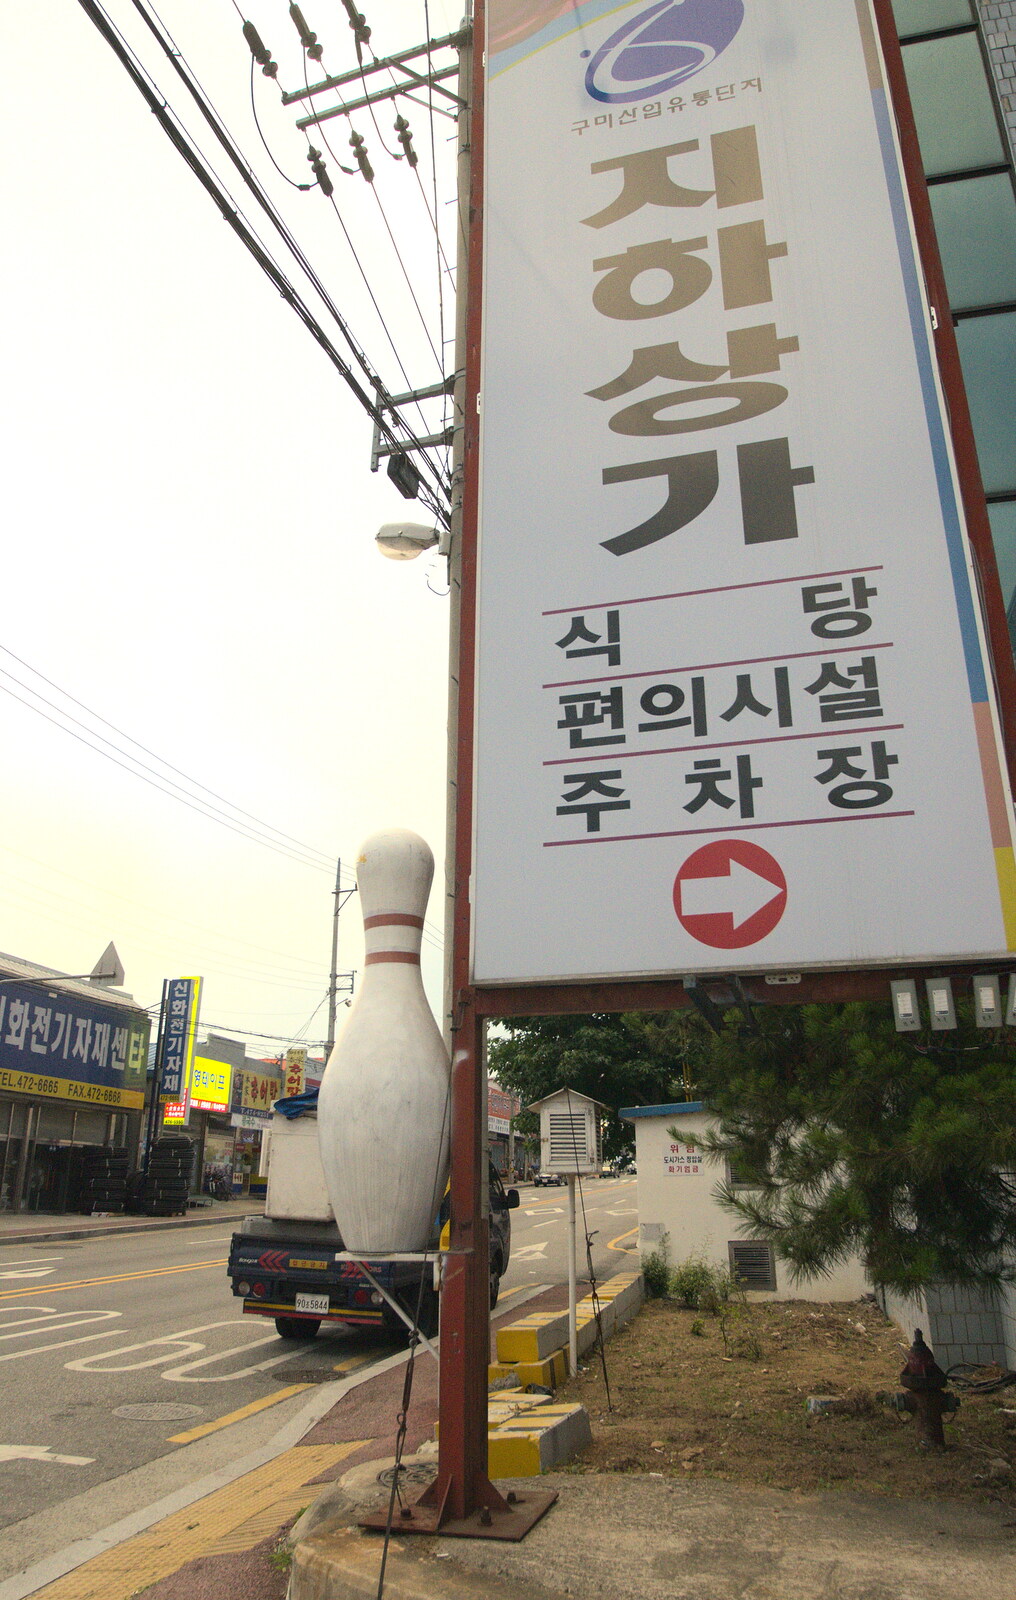 A giant bowling pin from Working at Samsung, and Geumosan Mountain, Gumi, Gyeongsangbuk-do, Korea - 24th June 2012